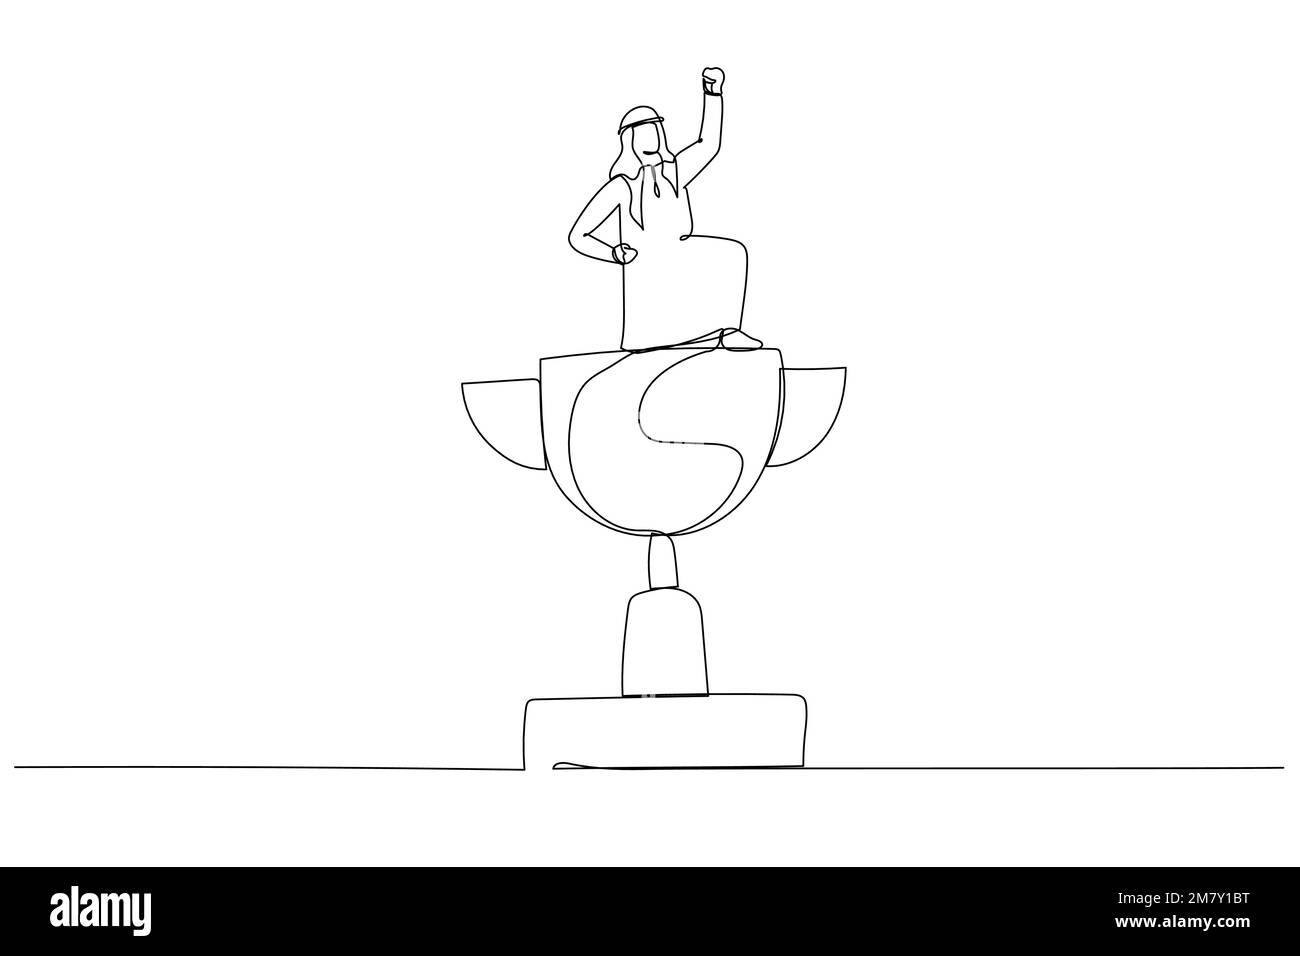 Cartoon of arab businessman winner raising flag on winning trophy get victory. Continuous line art design Stock Vector